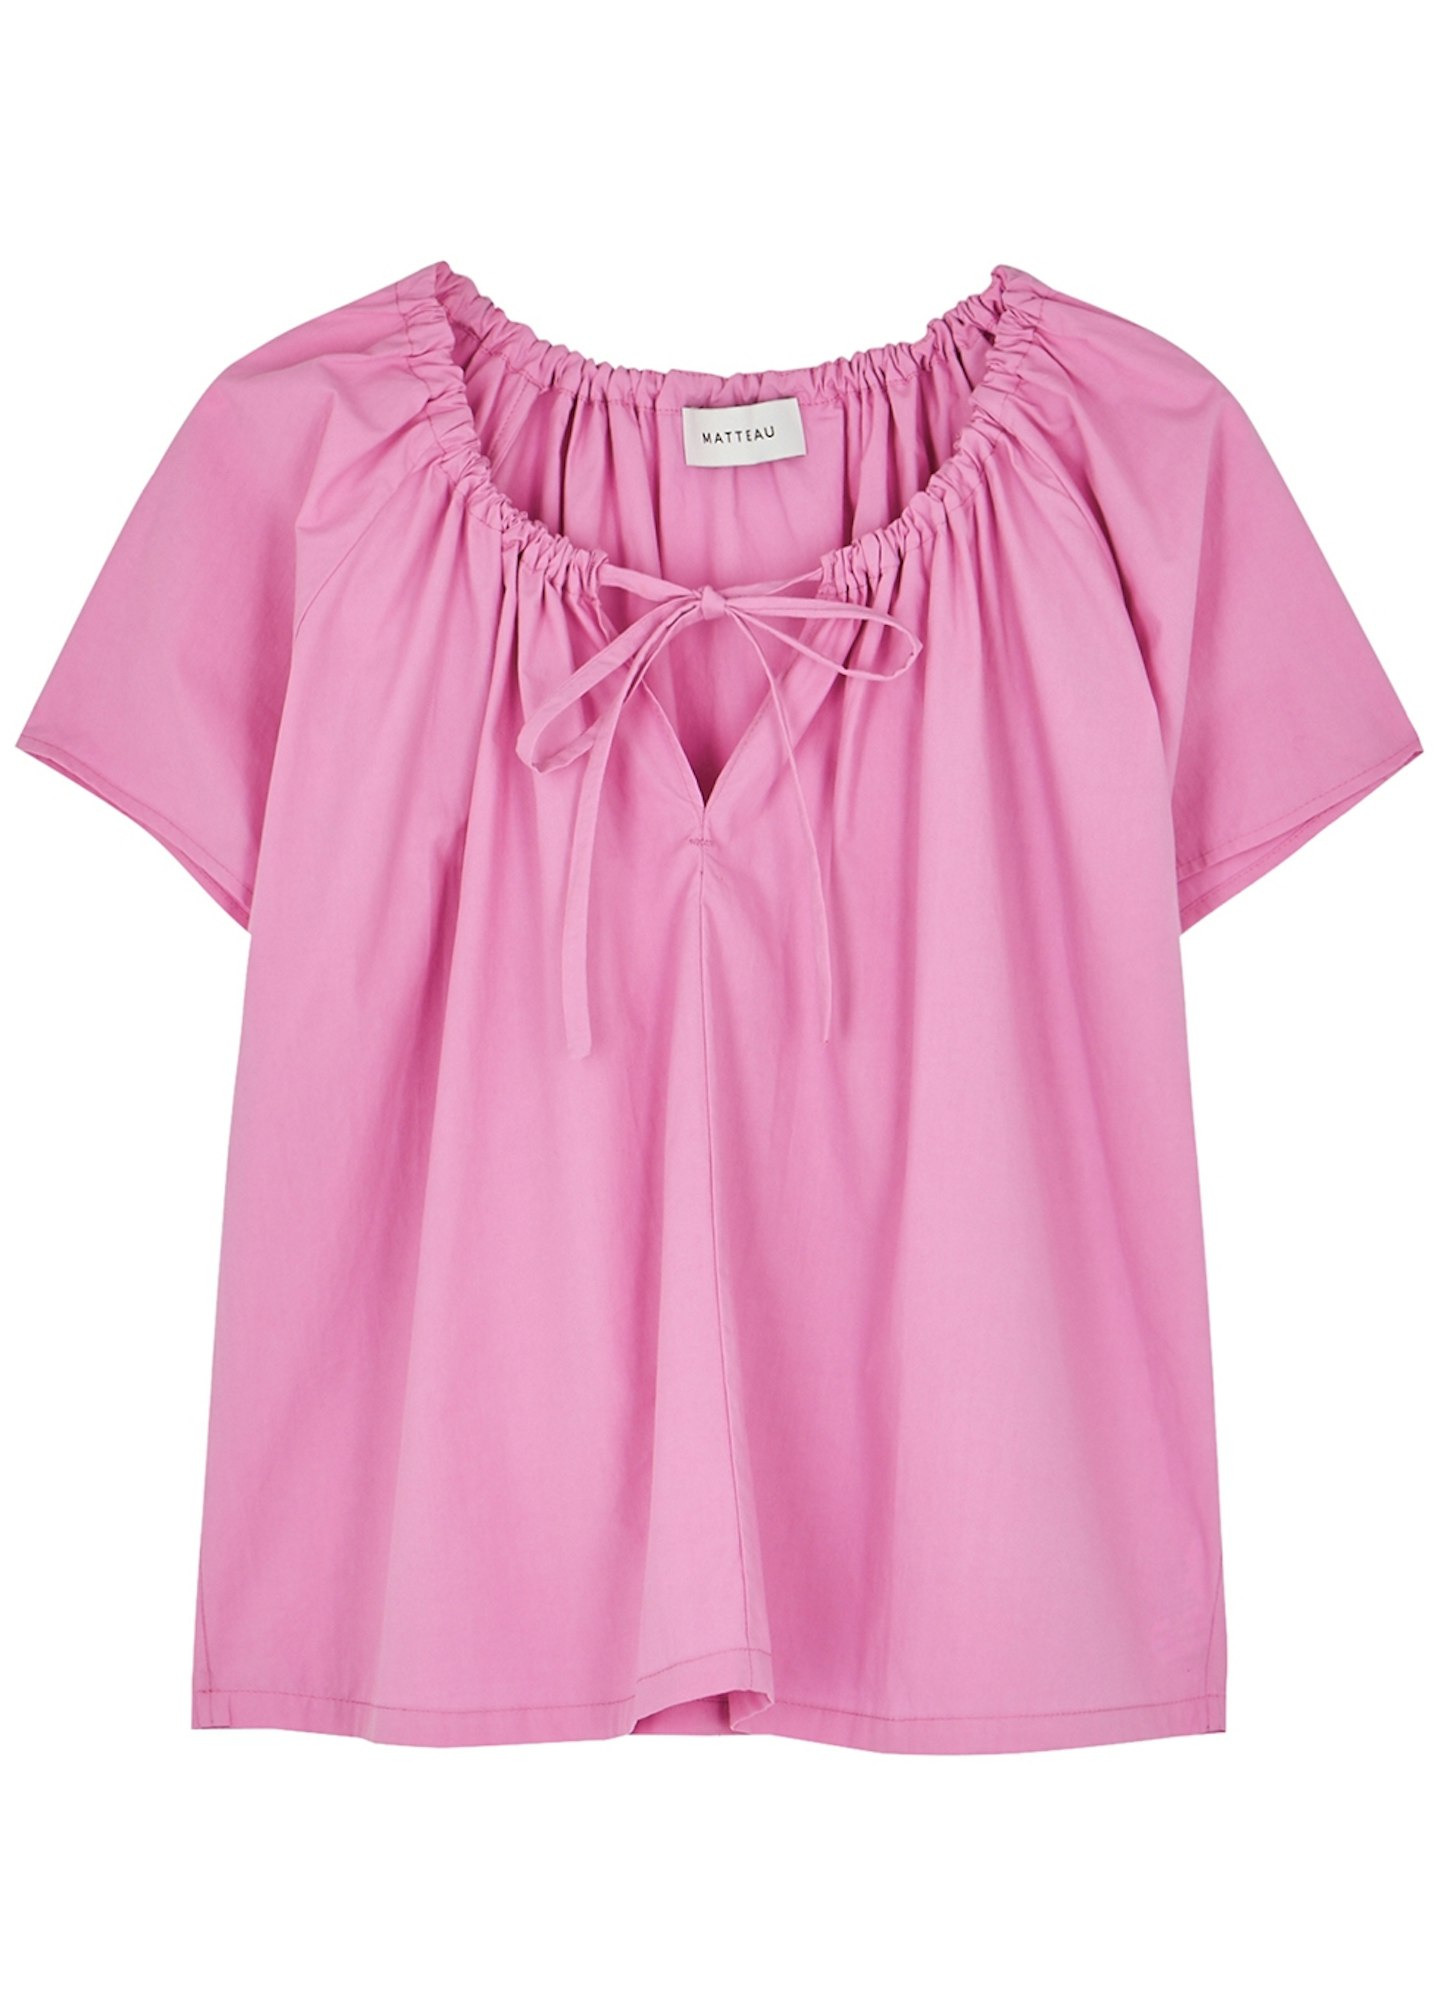 Matteau, The Drawcord pink cotton blouse, £170